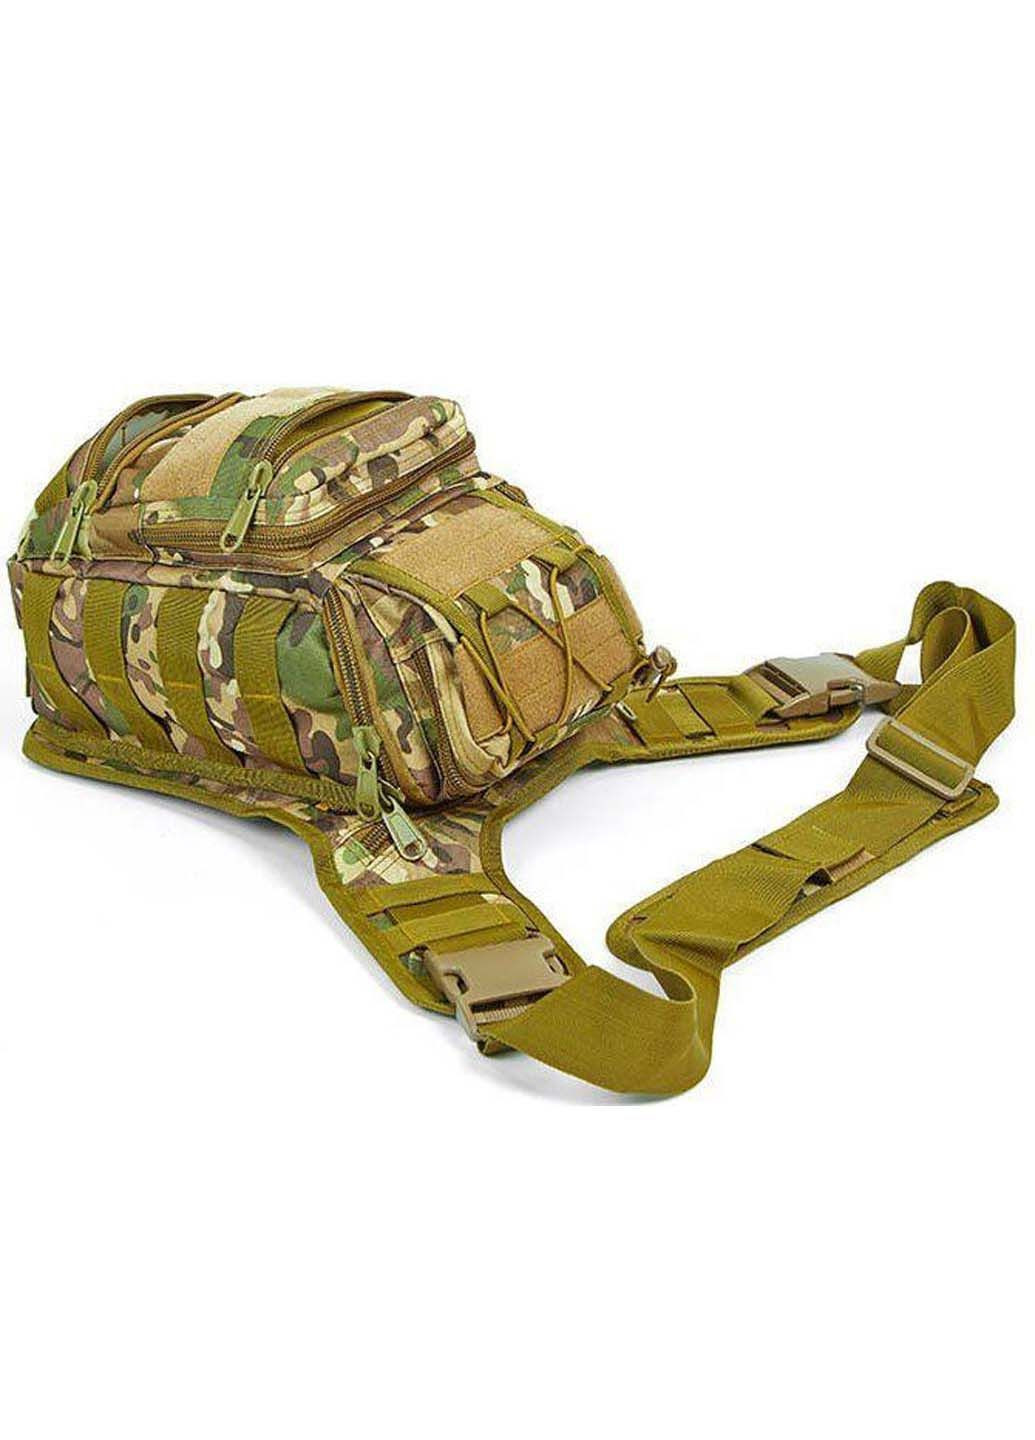 Рюкзак-сумка штурмовой TY-803 20 л SILVER KNIGHT (293516042)